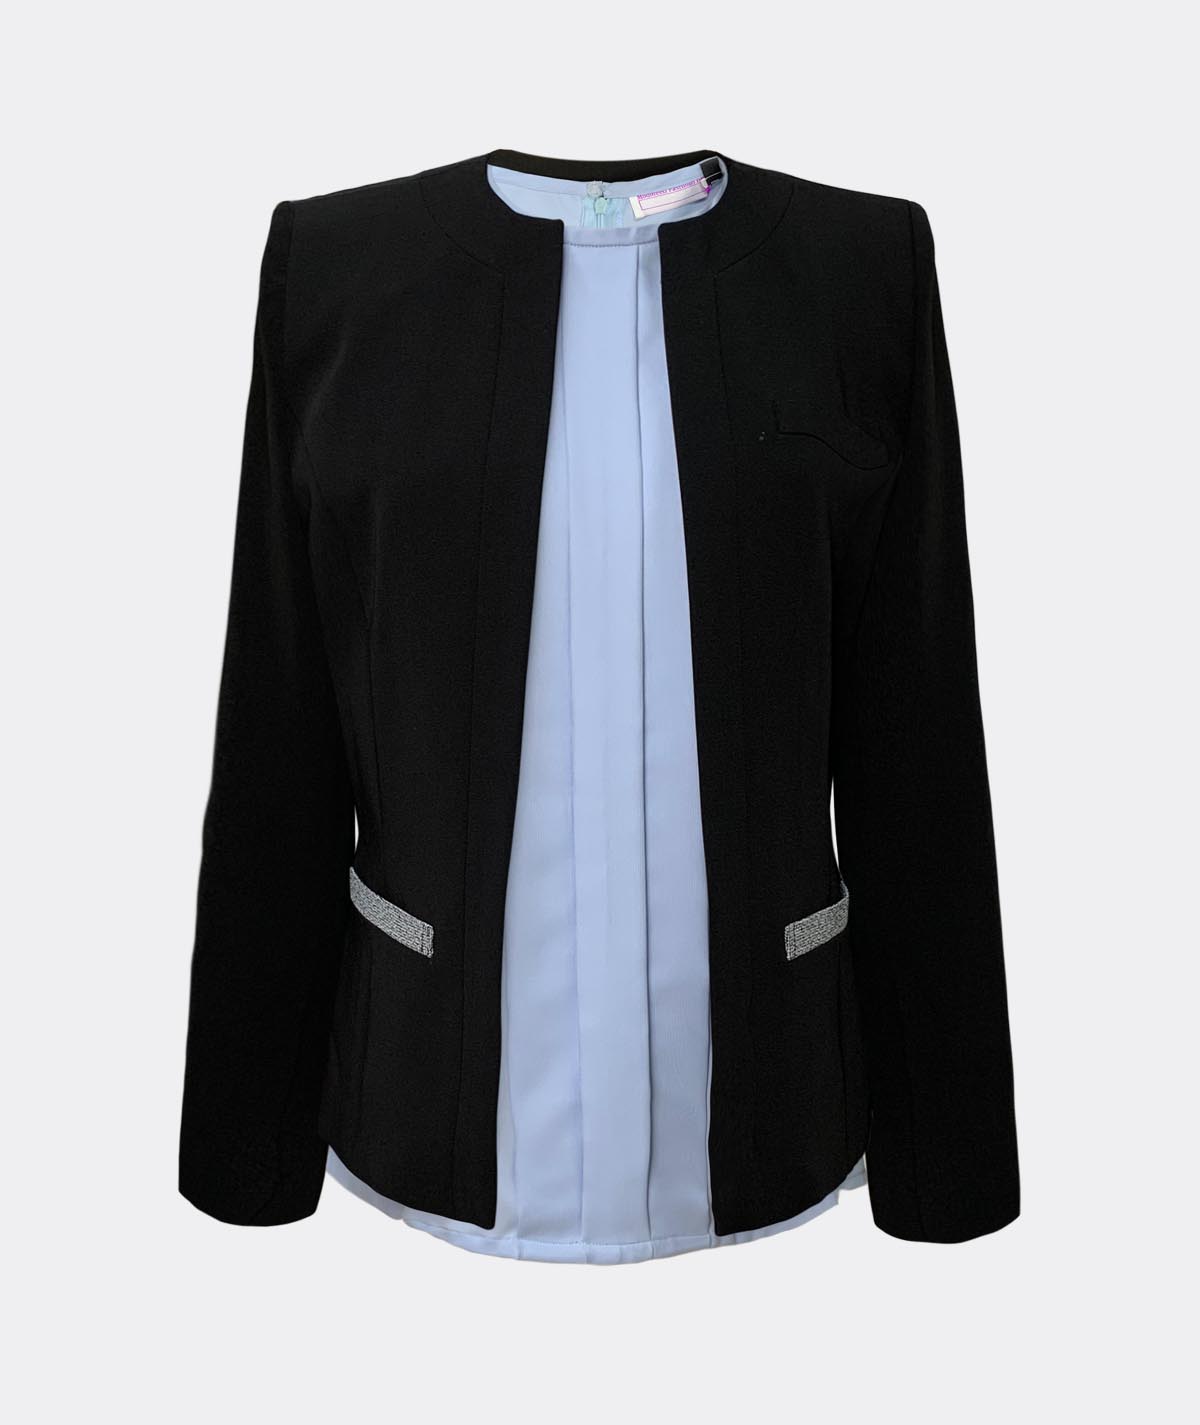 Receptionist jacket and blouse uniform